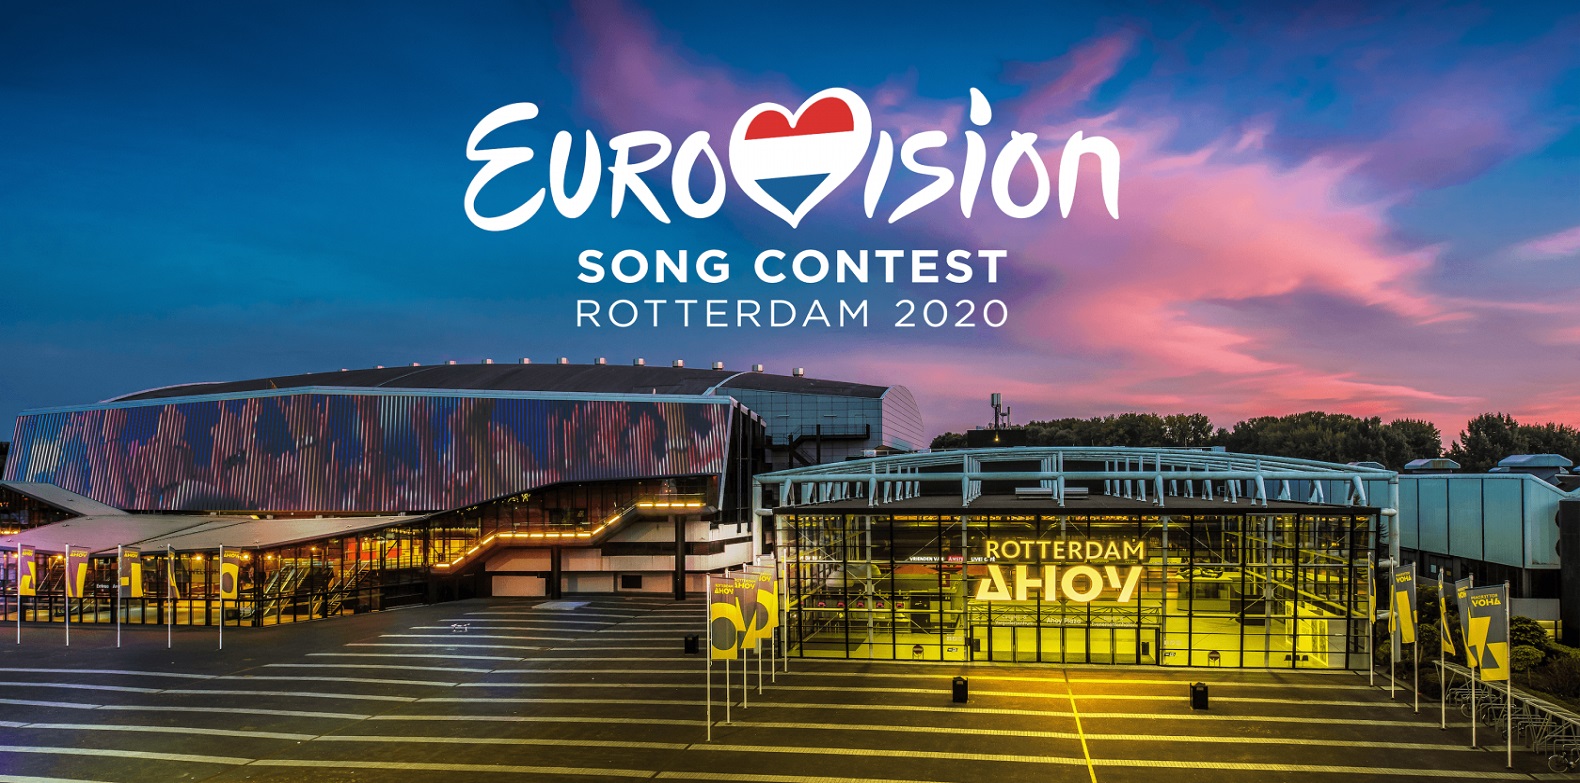 Eurovision: Στο φουλ οι προετοιμασίες για την εκπομπή της ΕΡΤ - Φωτογραφία 1